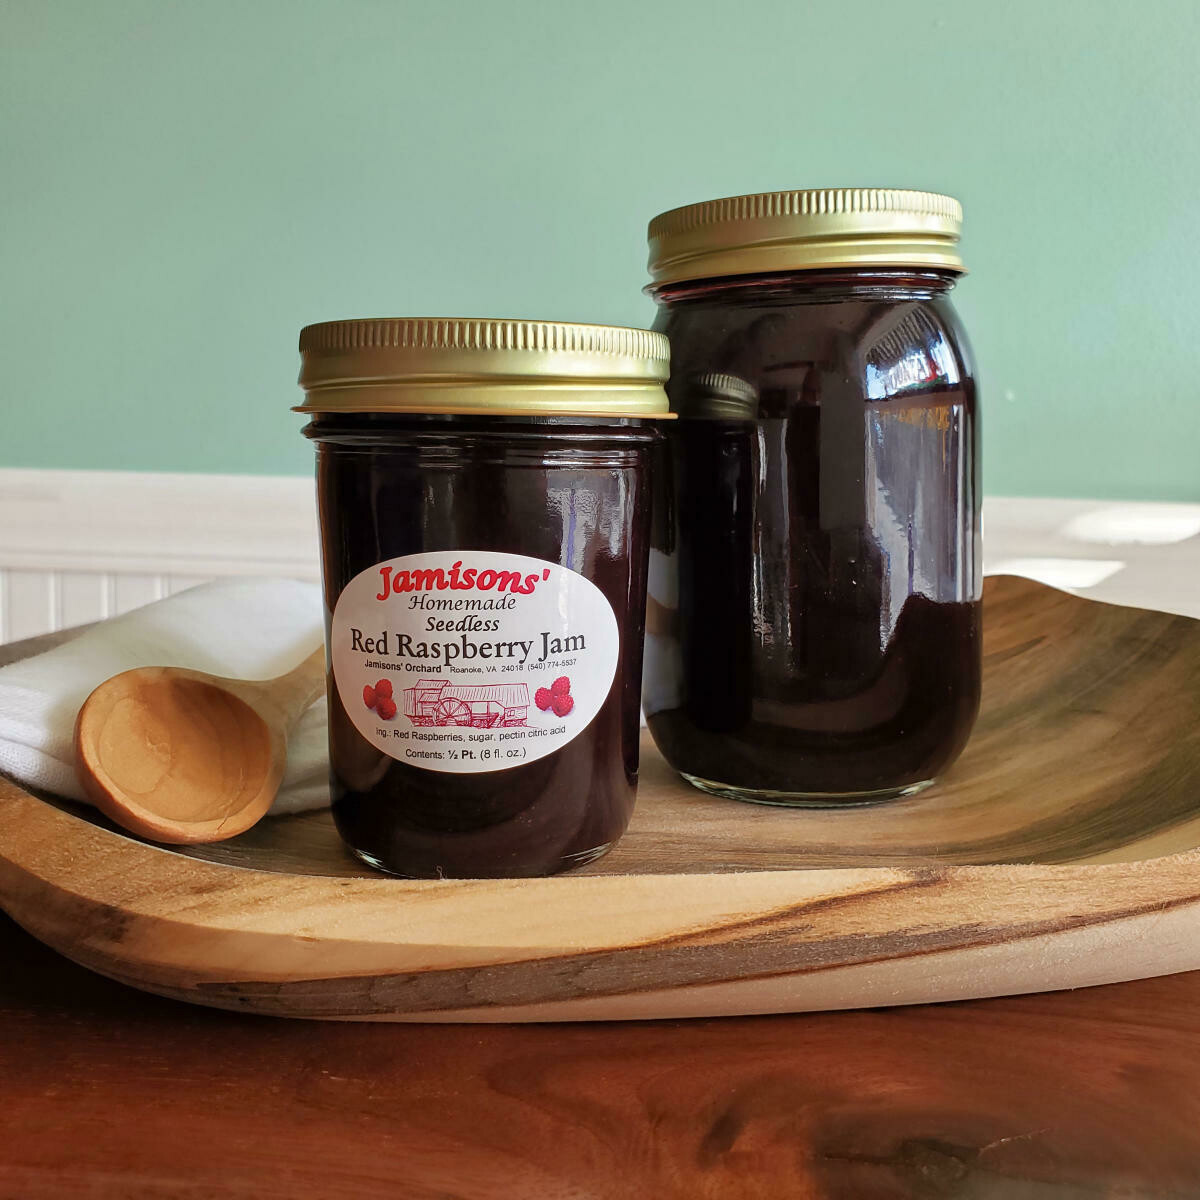 Jamisons' Homemade Seedless Red Raspberry Jam